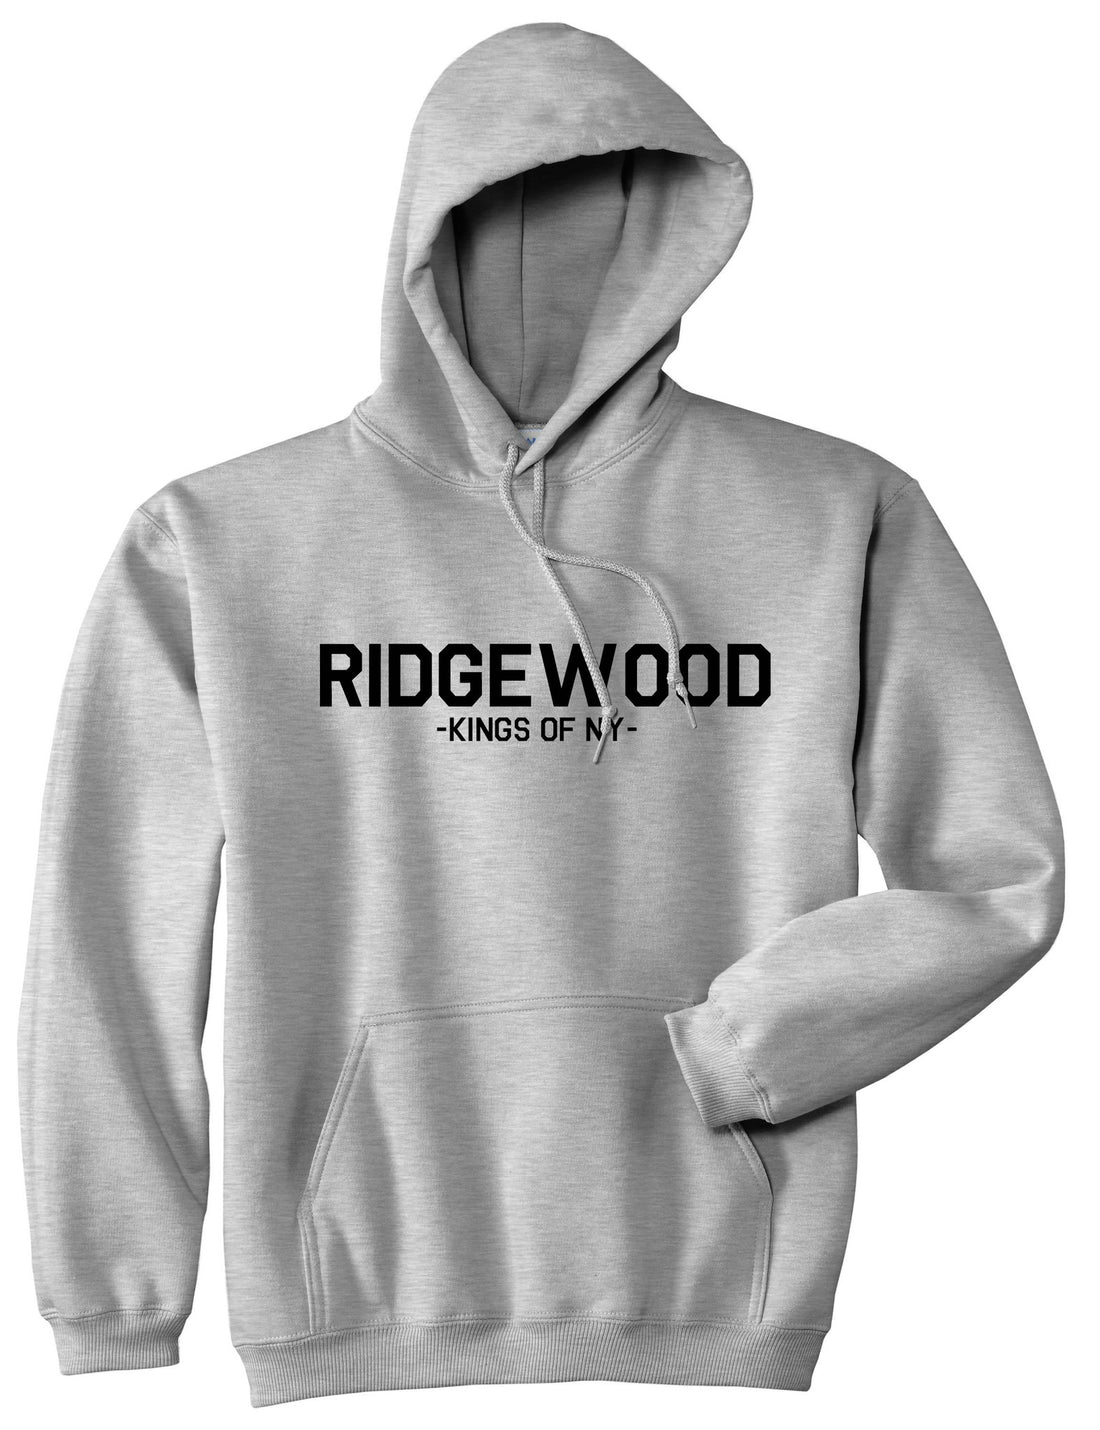 Ridgewood Queens New York Pullover Hoodie Hoody in Grey